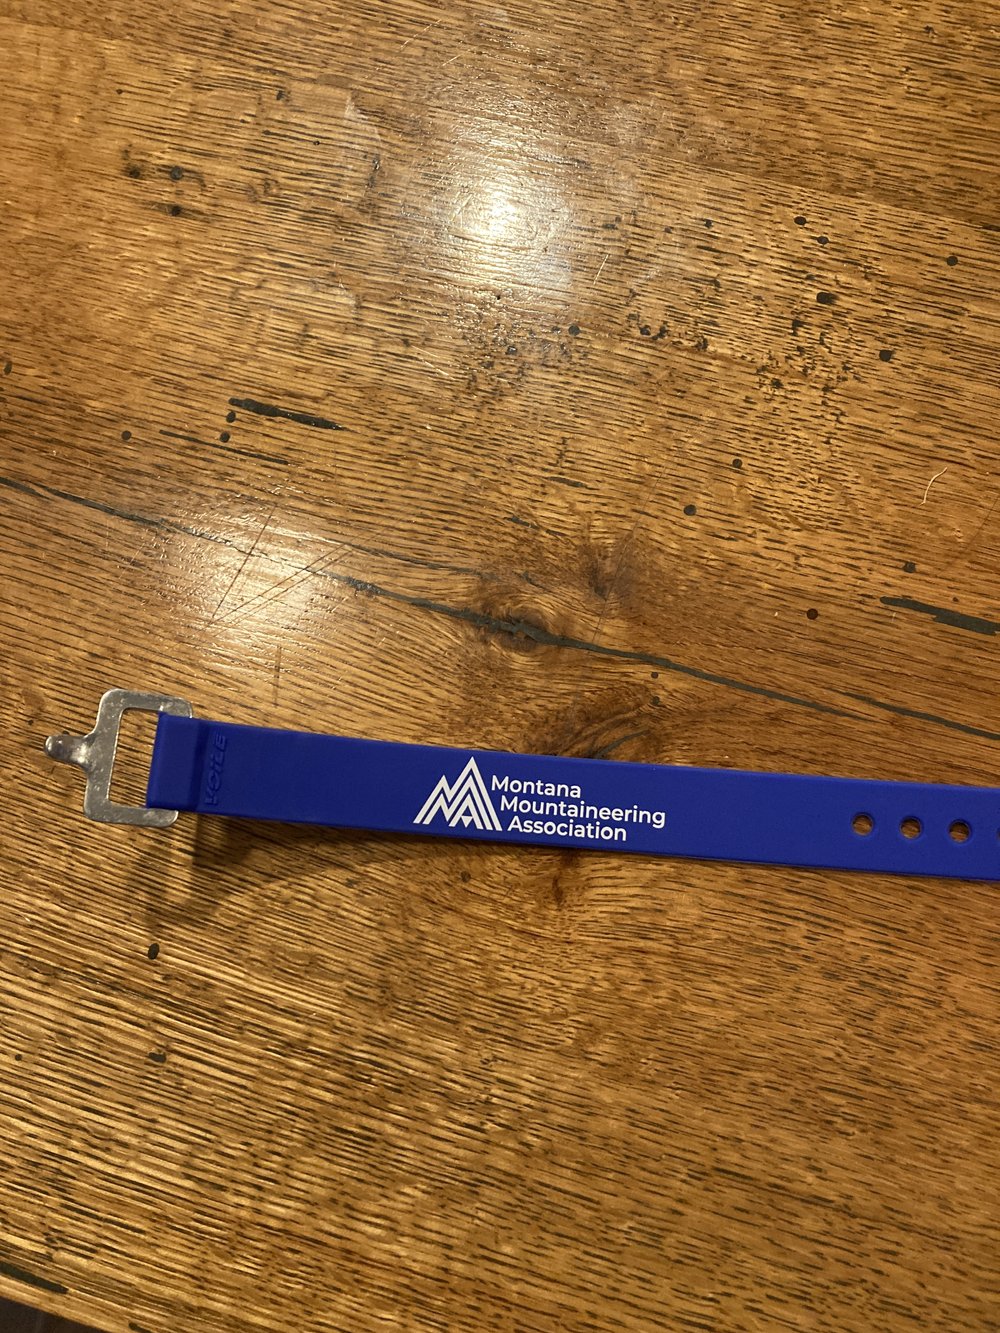 MMA Ski strap — Montana Mountaineering Association